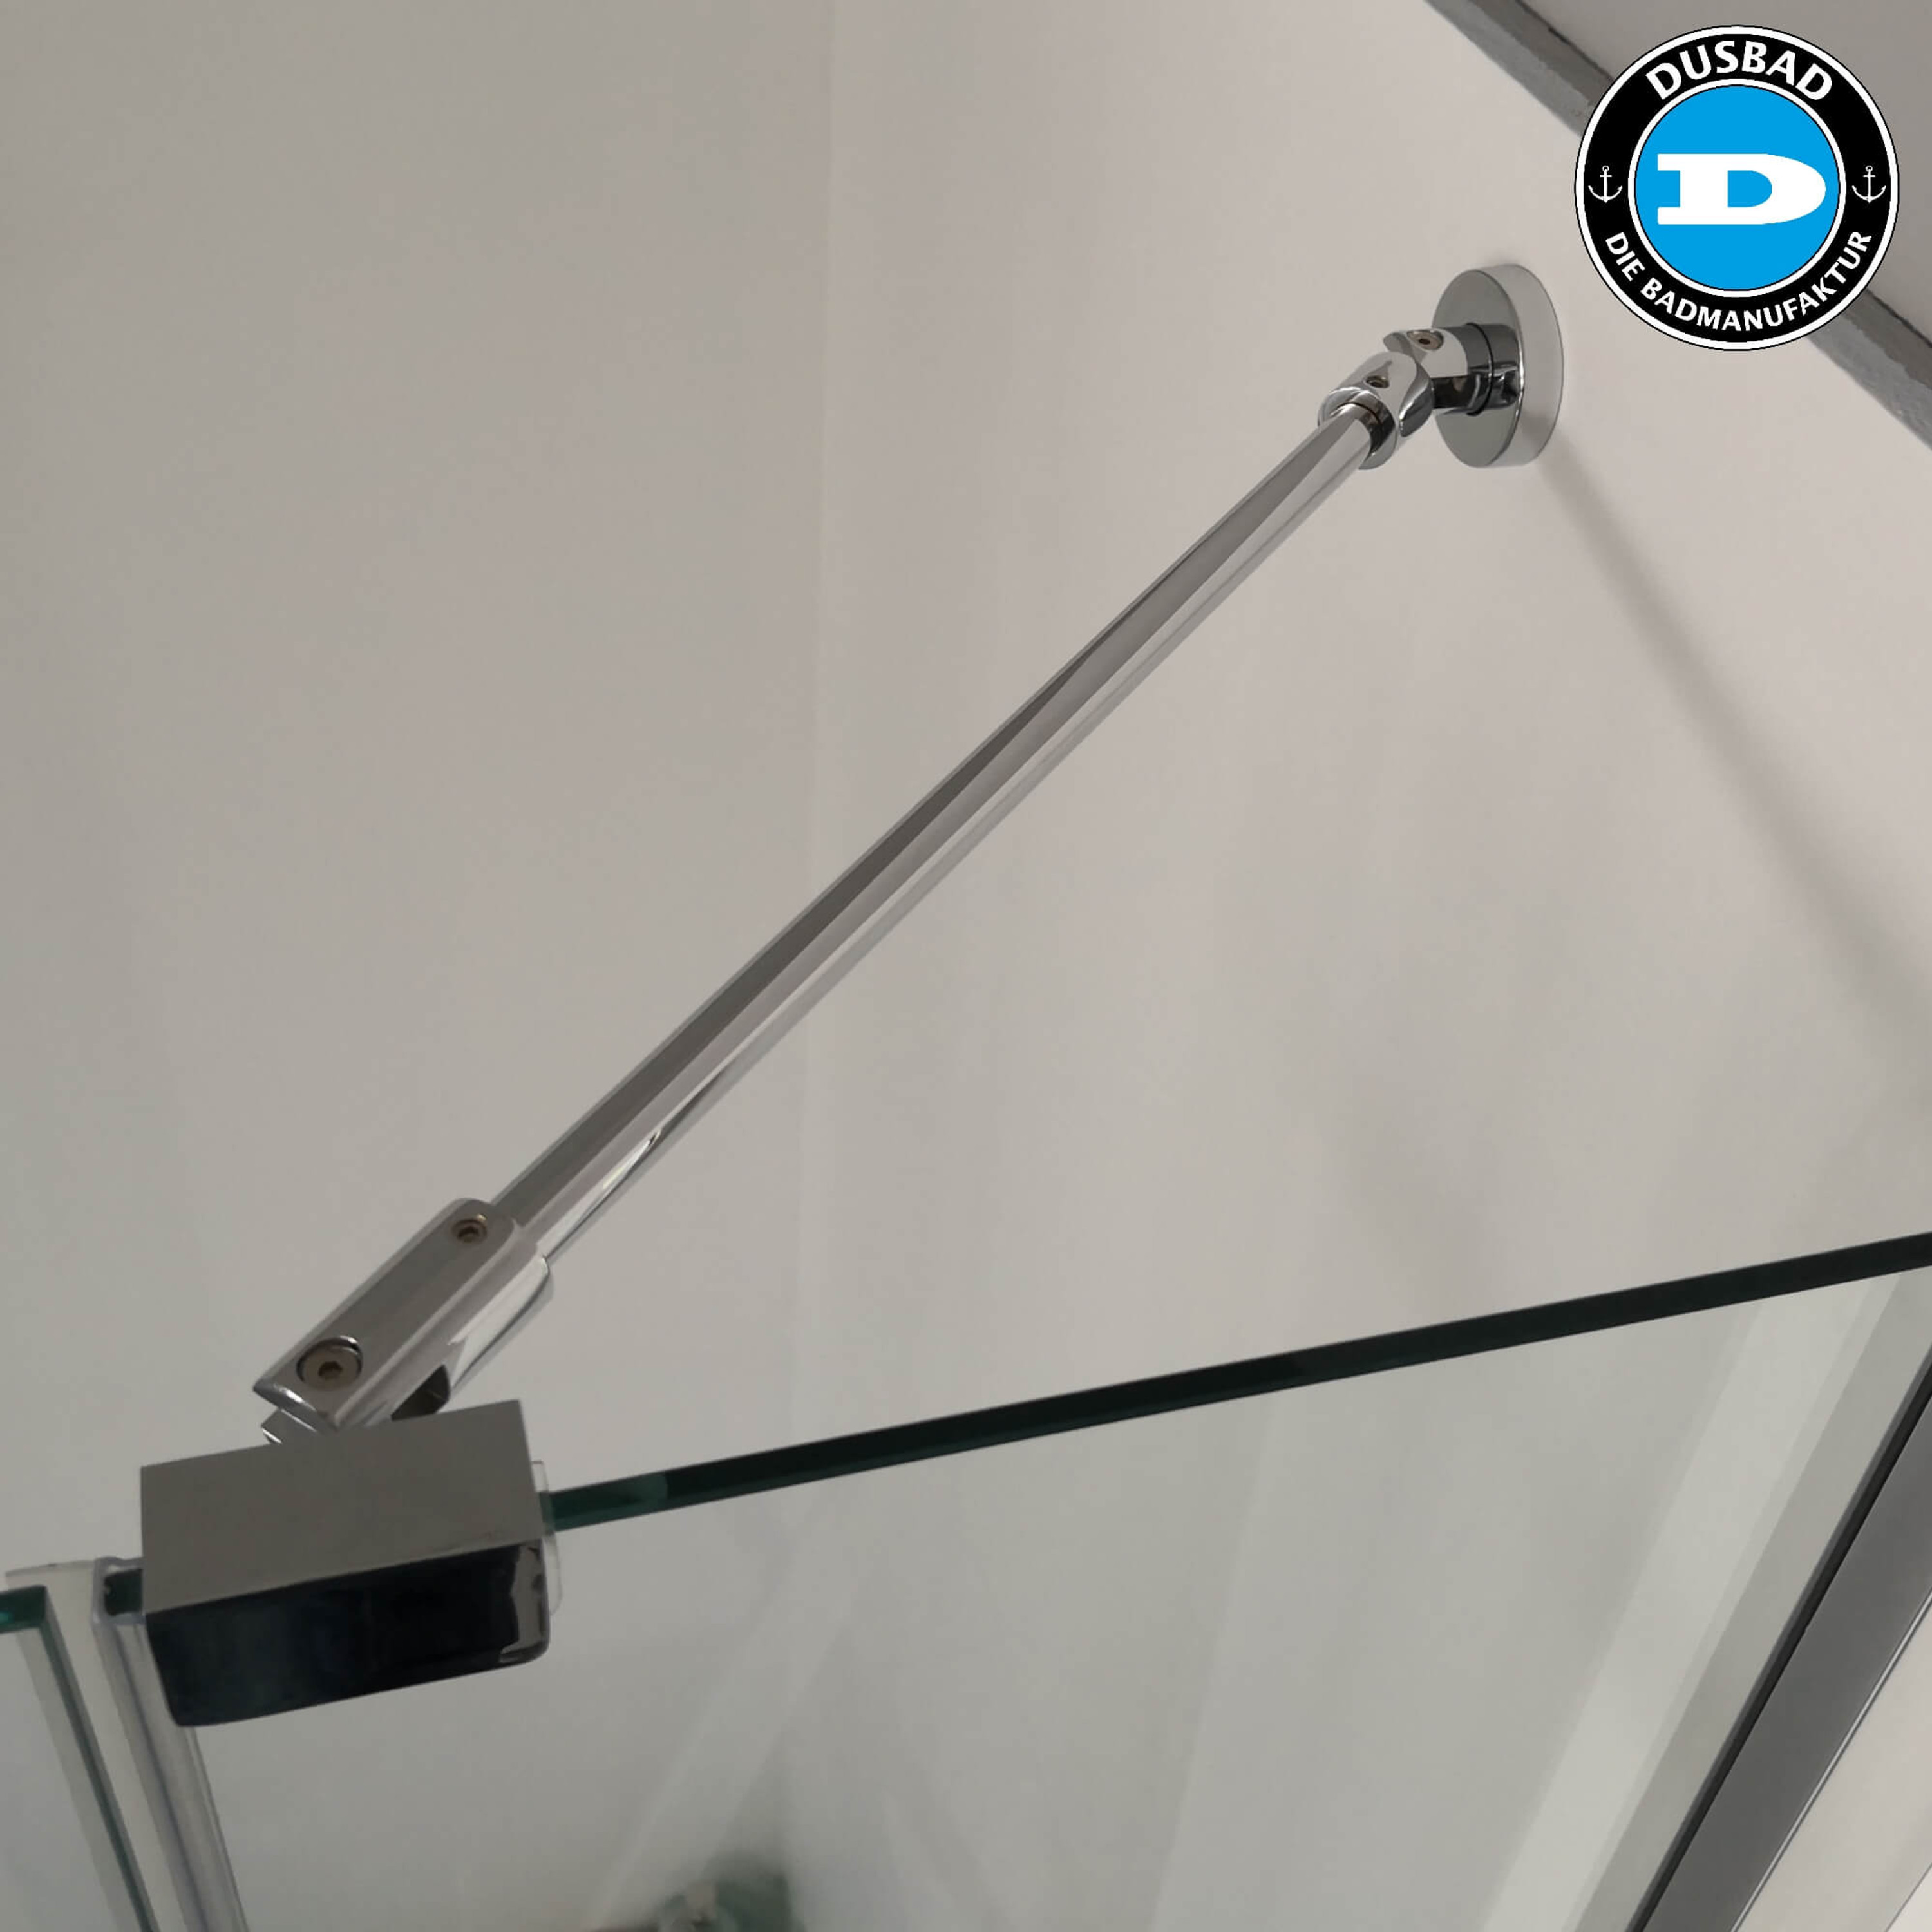 Dusbad Wandanschluss-Set - Stabilisator für Duschkabine Glas/Wand 300mm, chorm